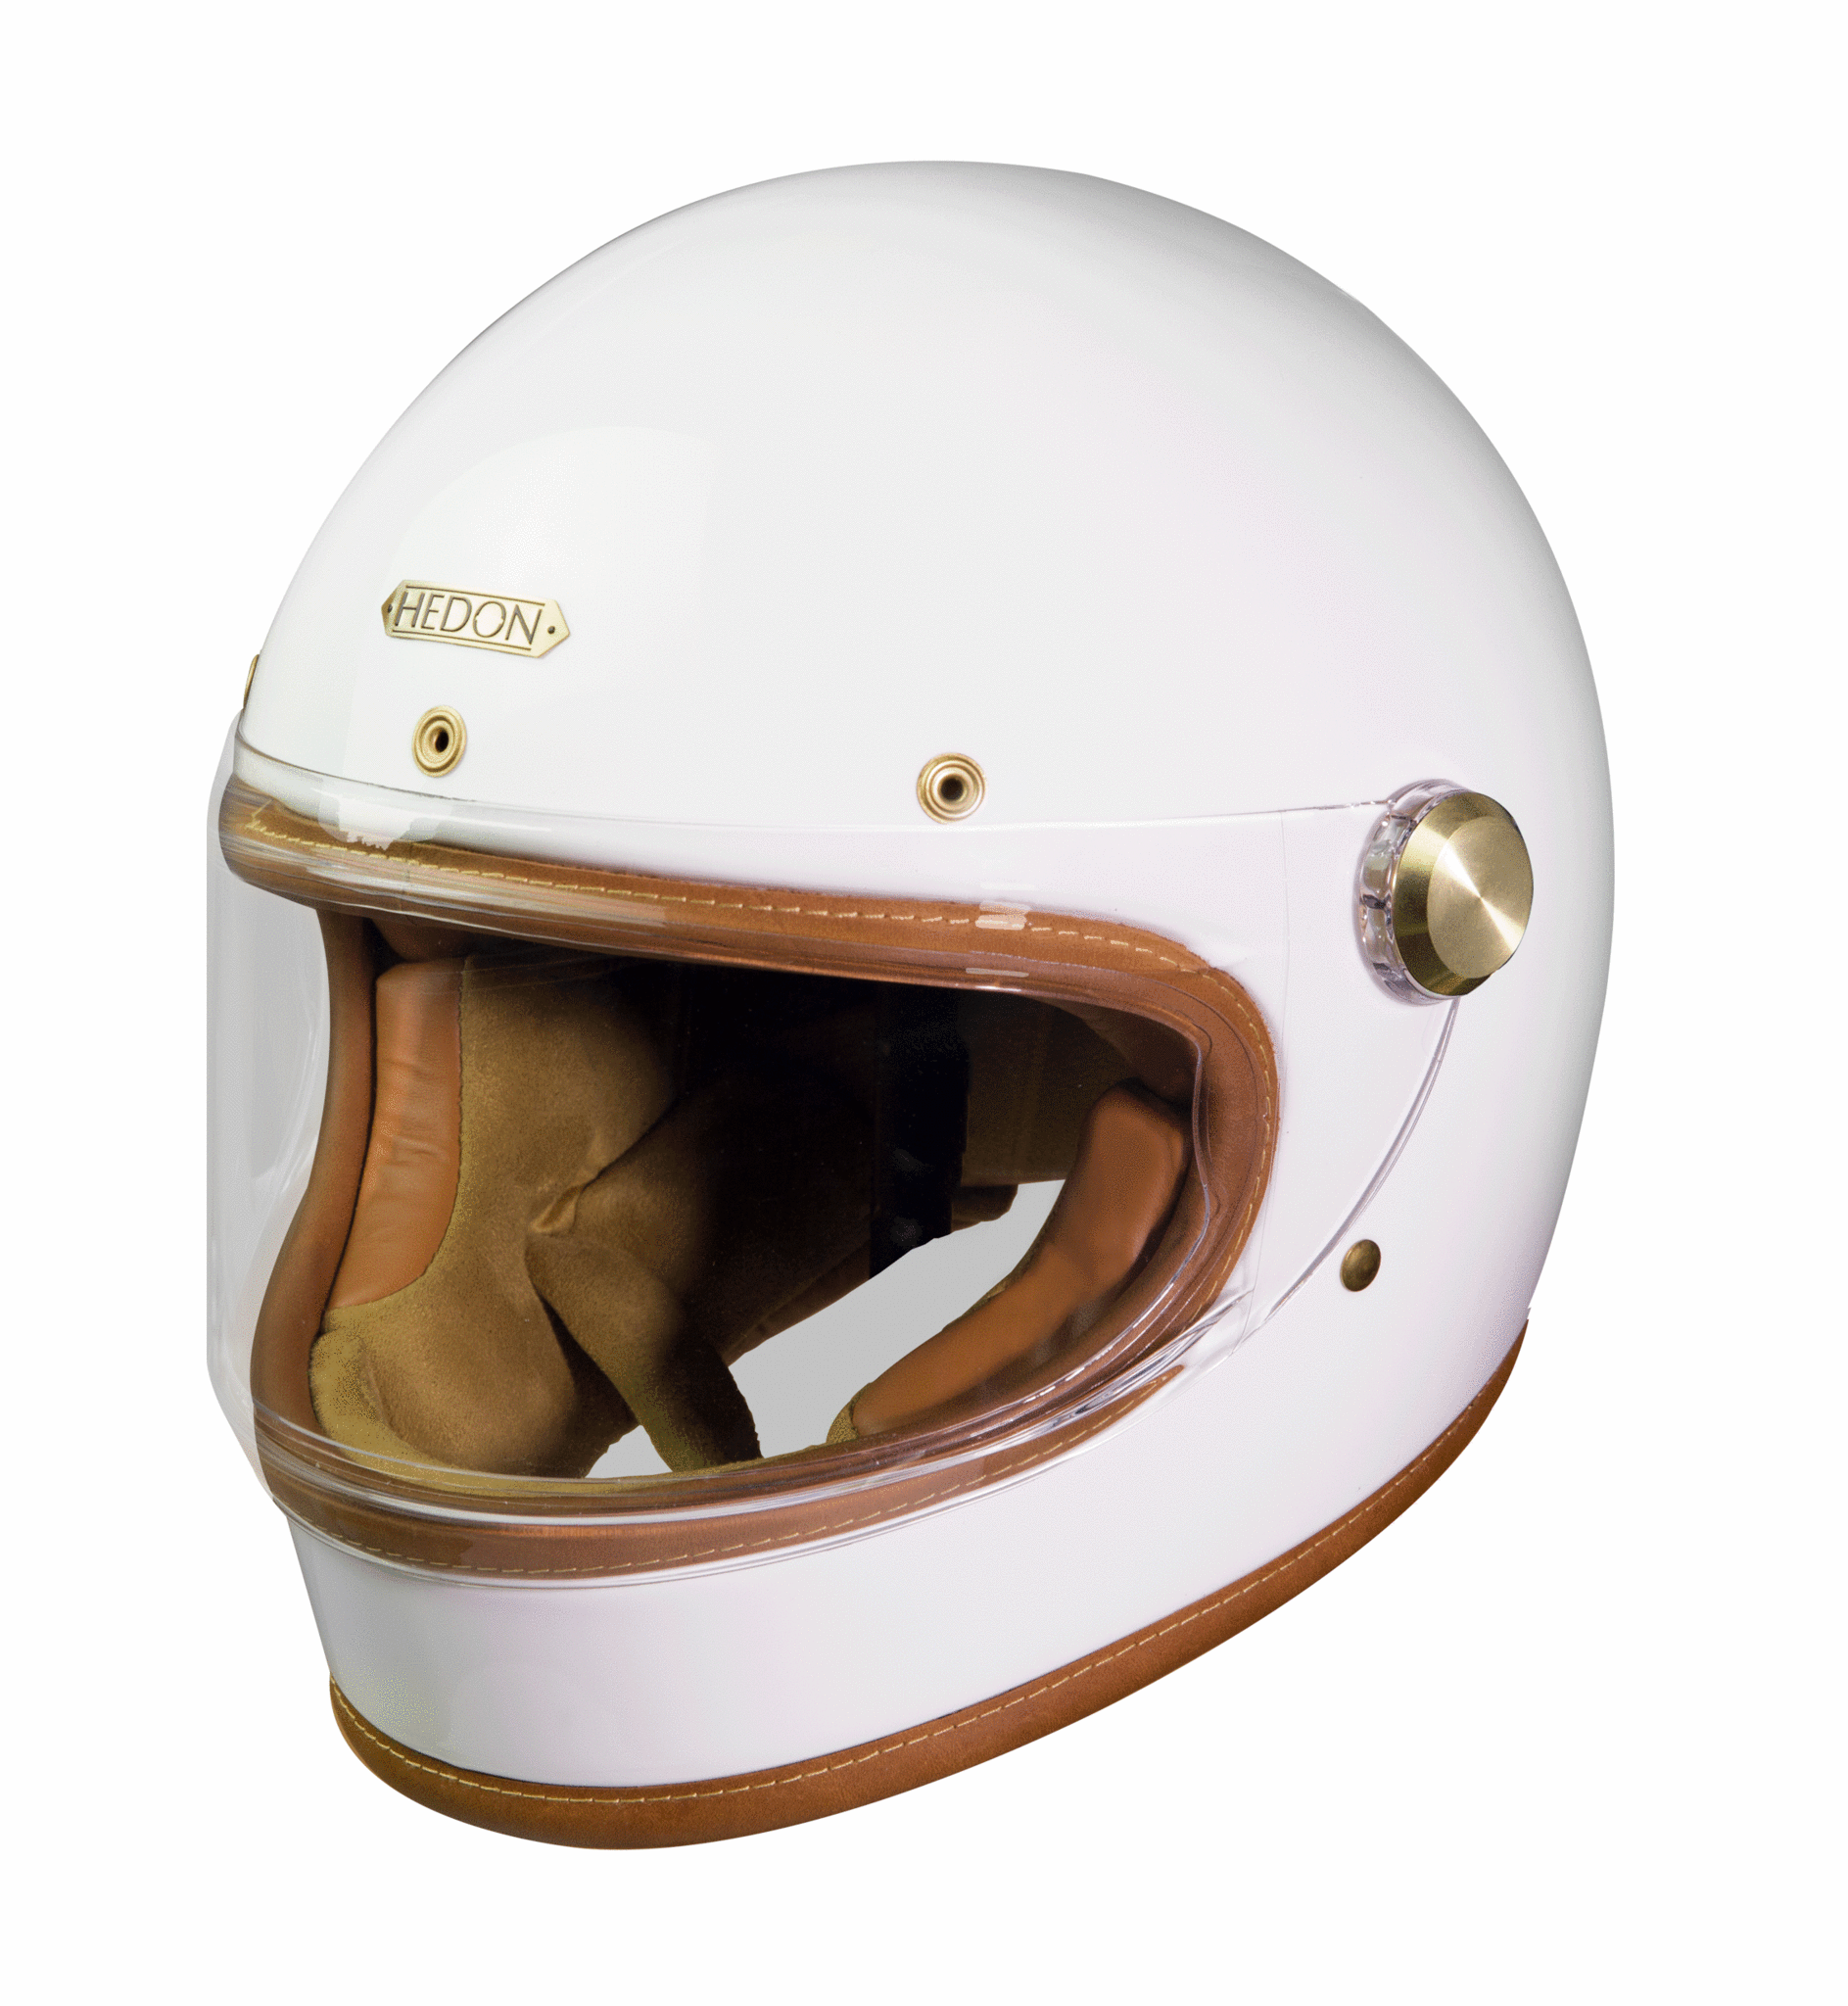 Hedon Heroine racer knight white motorcycle helmet